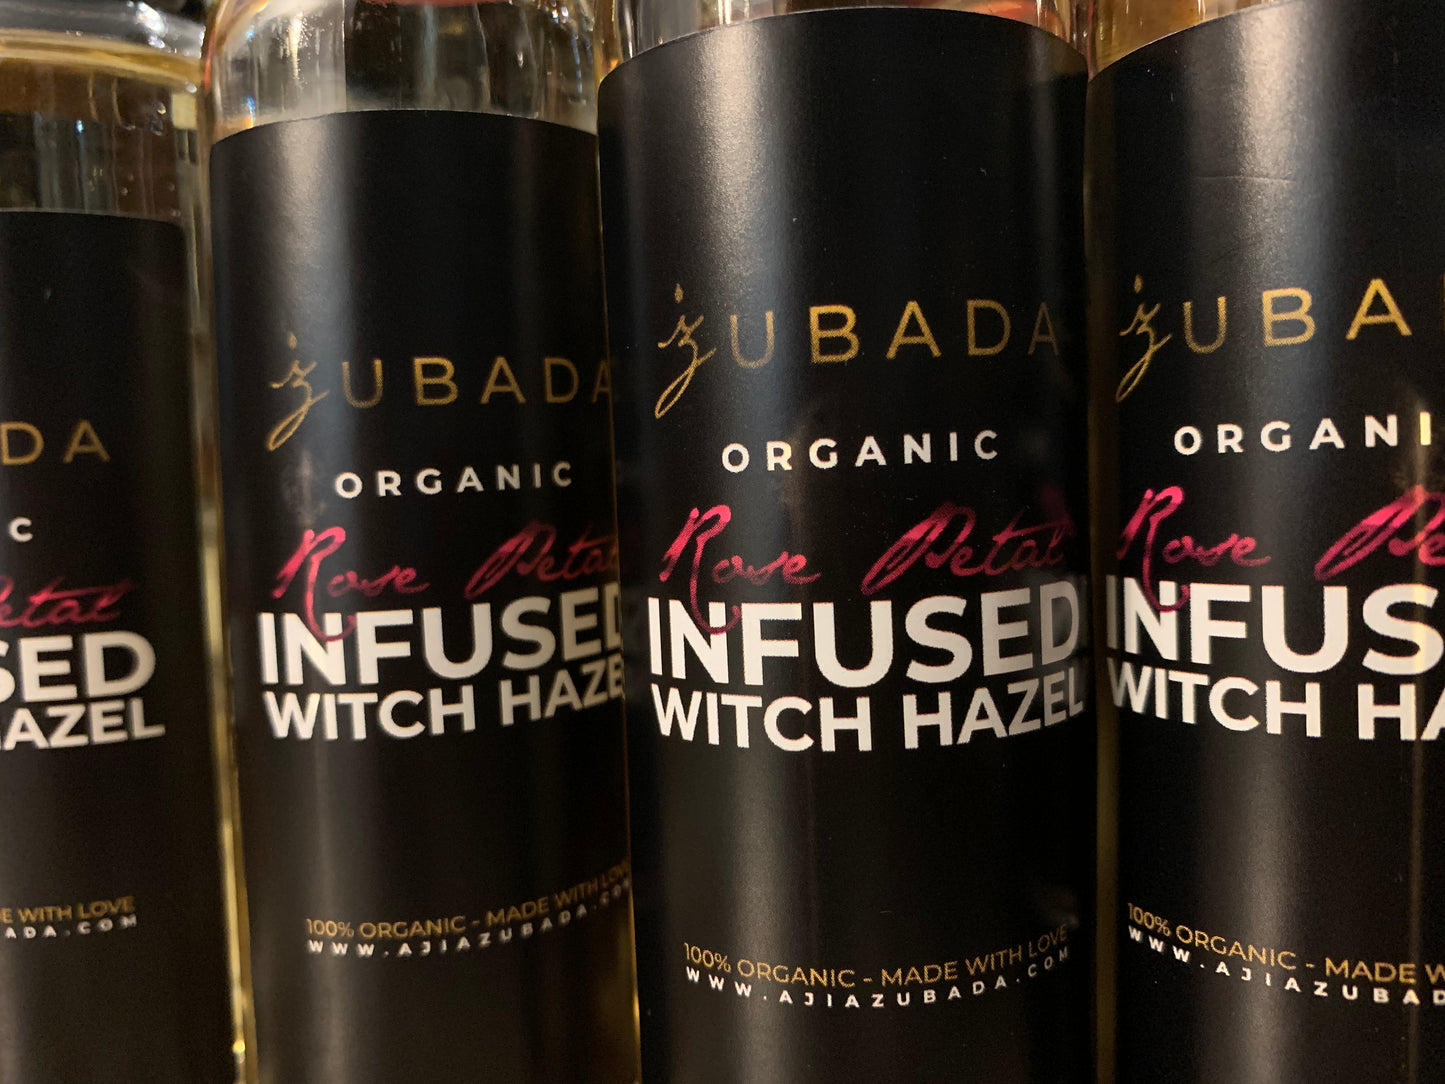 Zubada Organic Rose Petal Infused Witch Hazel